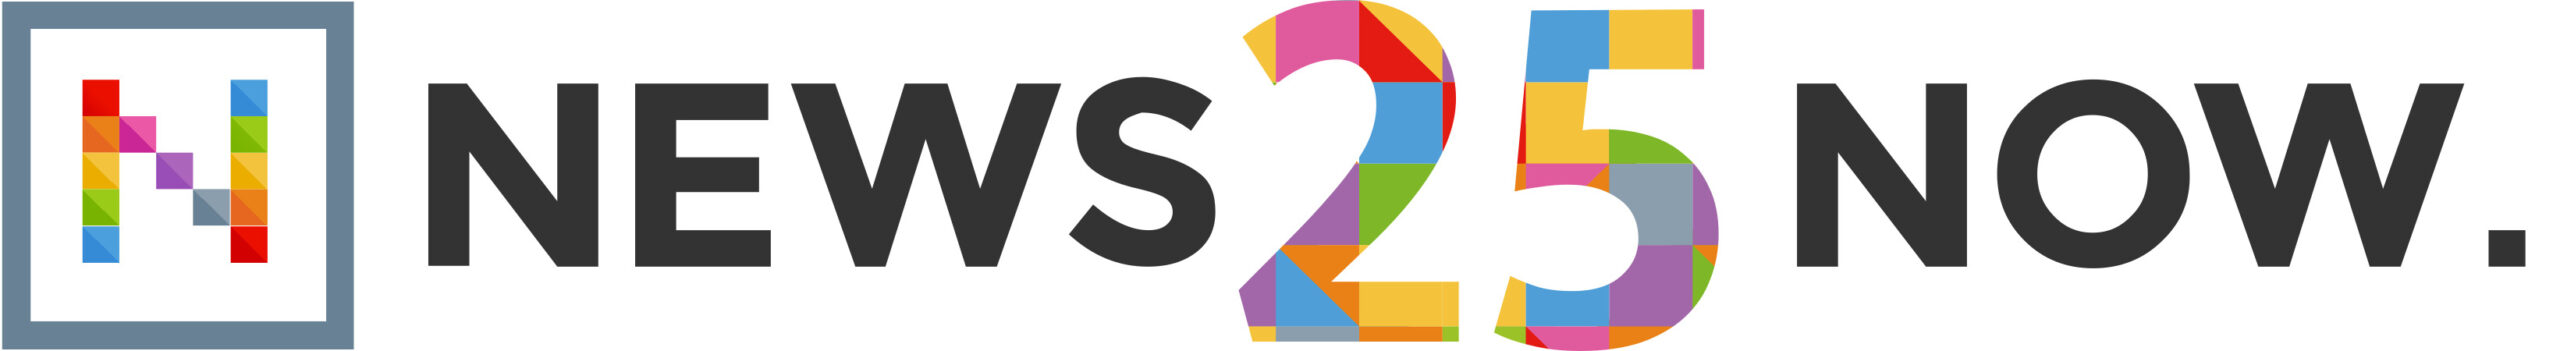 nn logo 25 anniversary inline